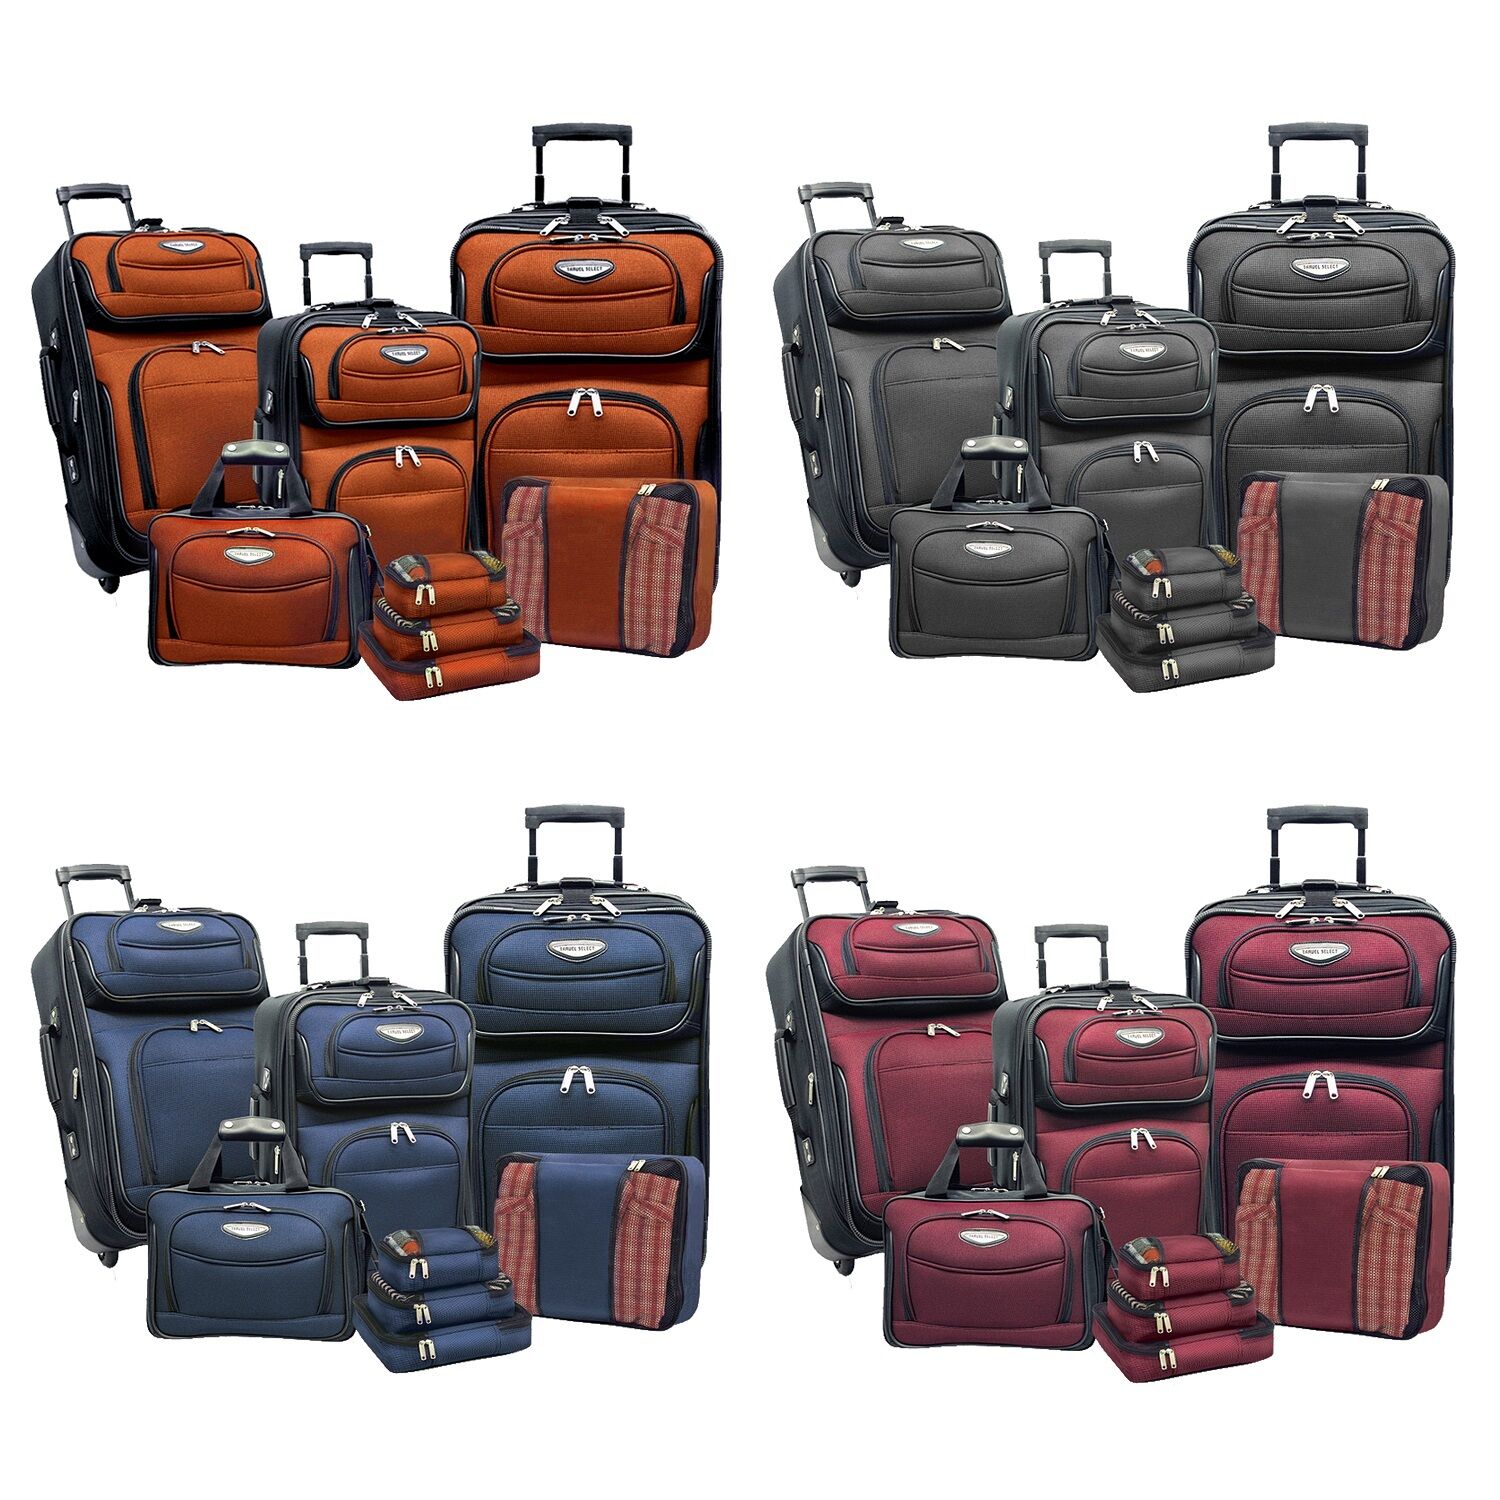 Amsterdam 8-Piece Light Expandable Rolling Luggage Suitcase Tote Bag Travel Set Traveler's Choice TS6950G-XX, TS6950N-XX, TS6950O-XX, TS6950R-XX